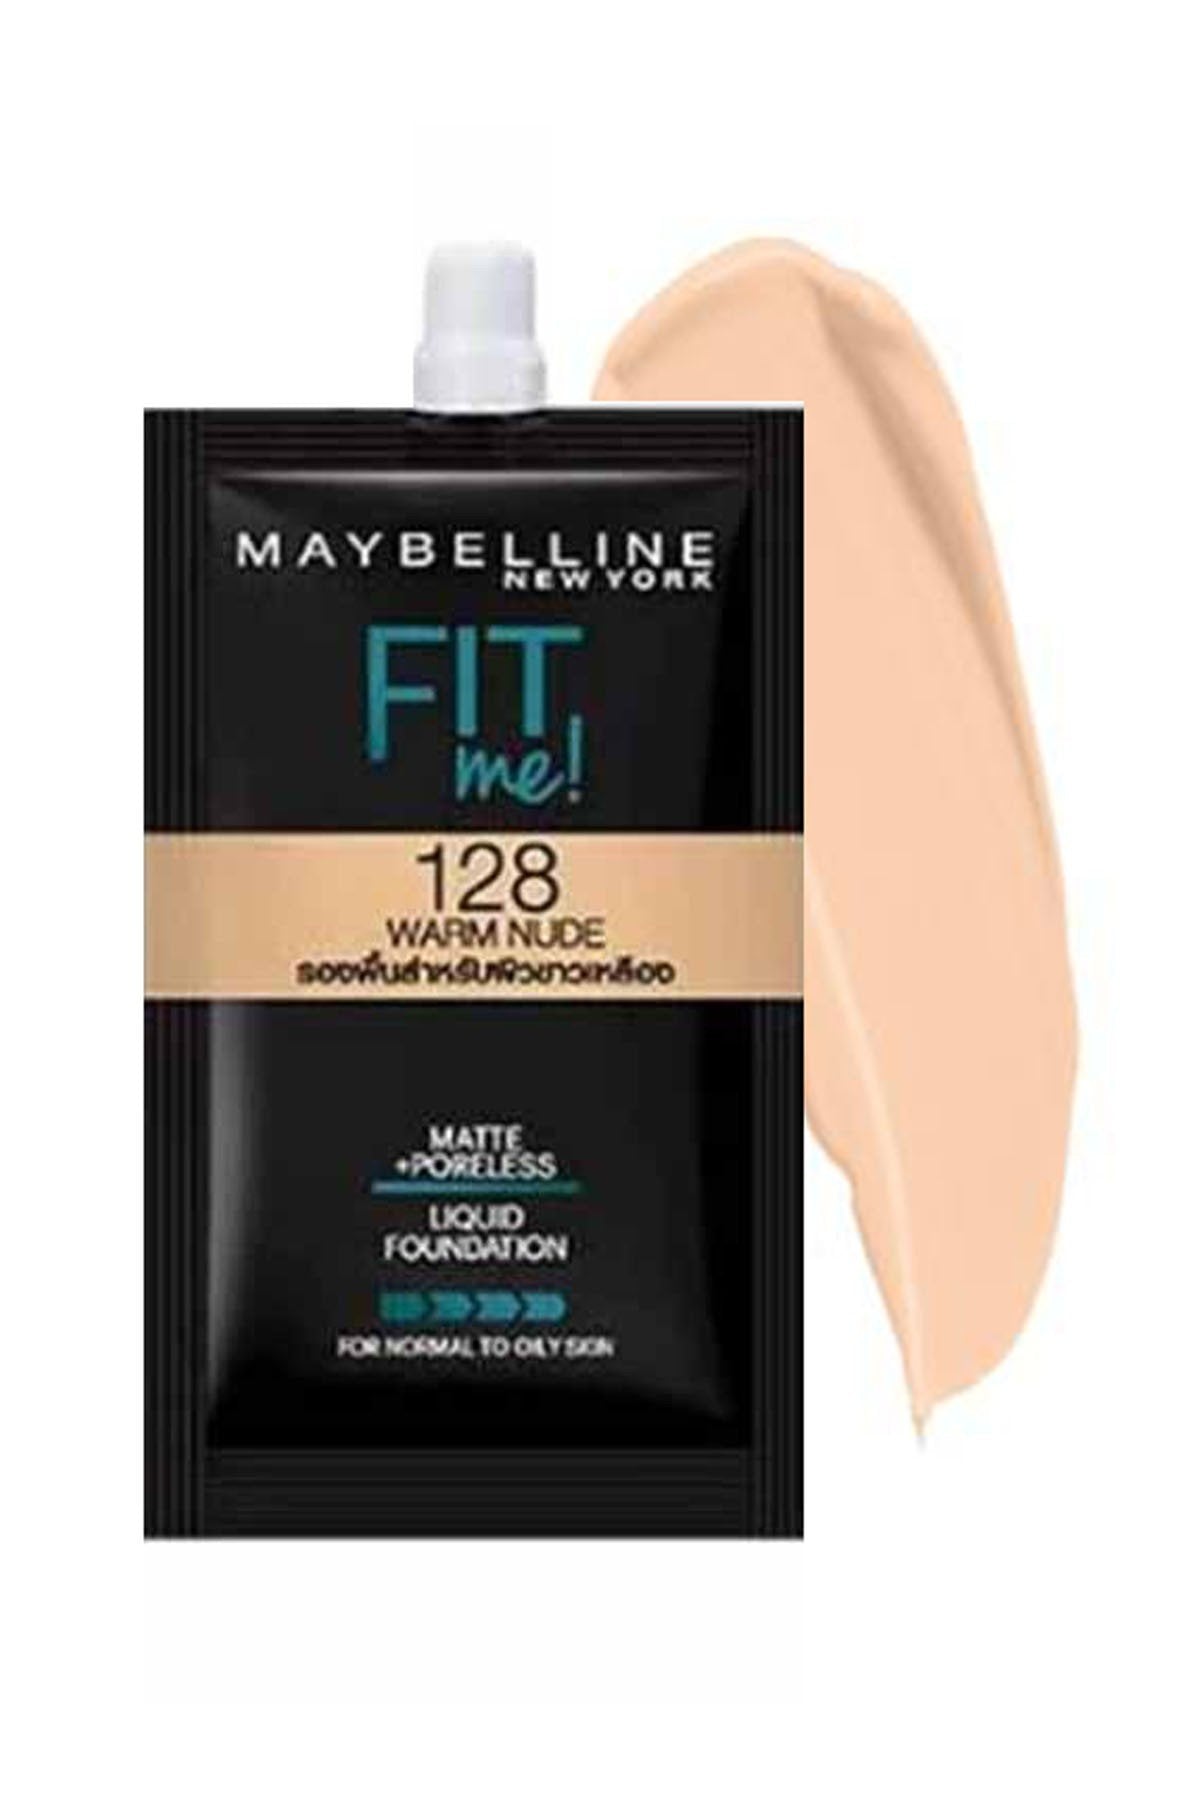 Maybelline Fit me! Matte + Poreless Foundation 24 Pack Bundle New